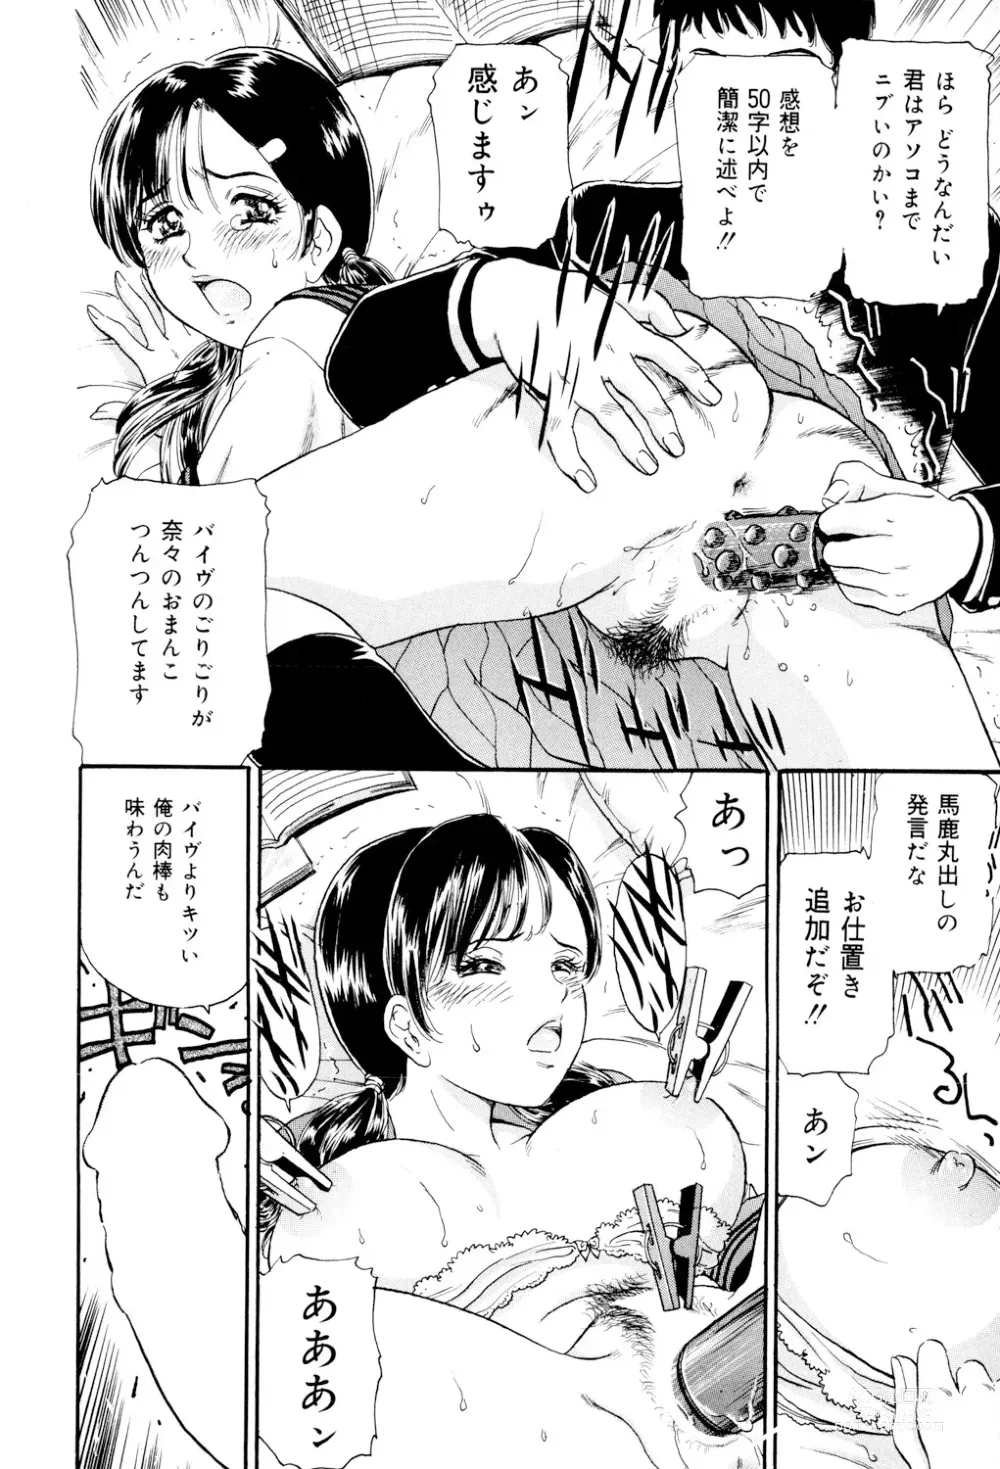 Page 7 of manga Mecha Mote Furin